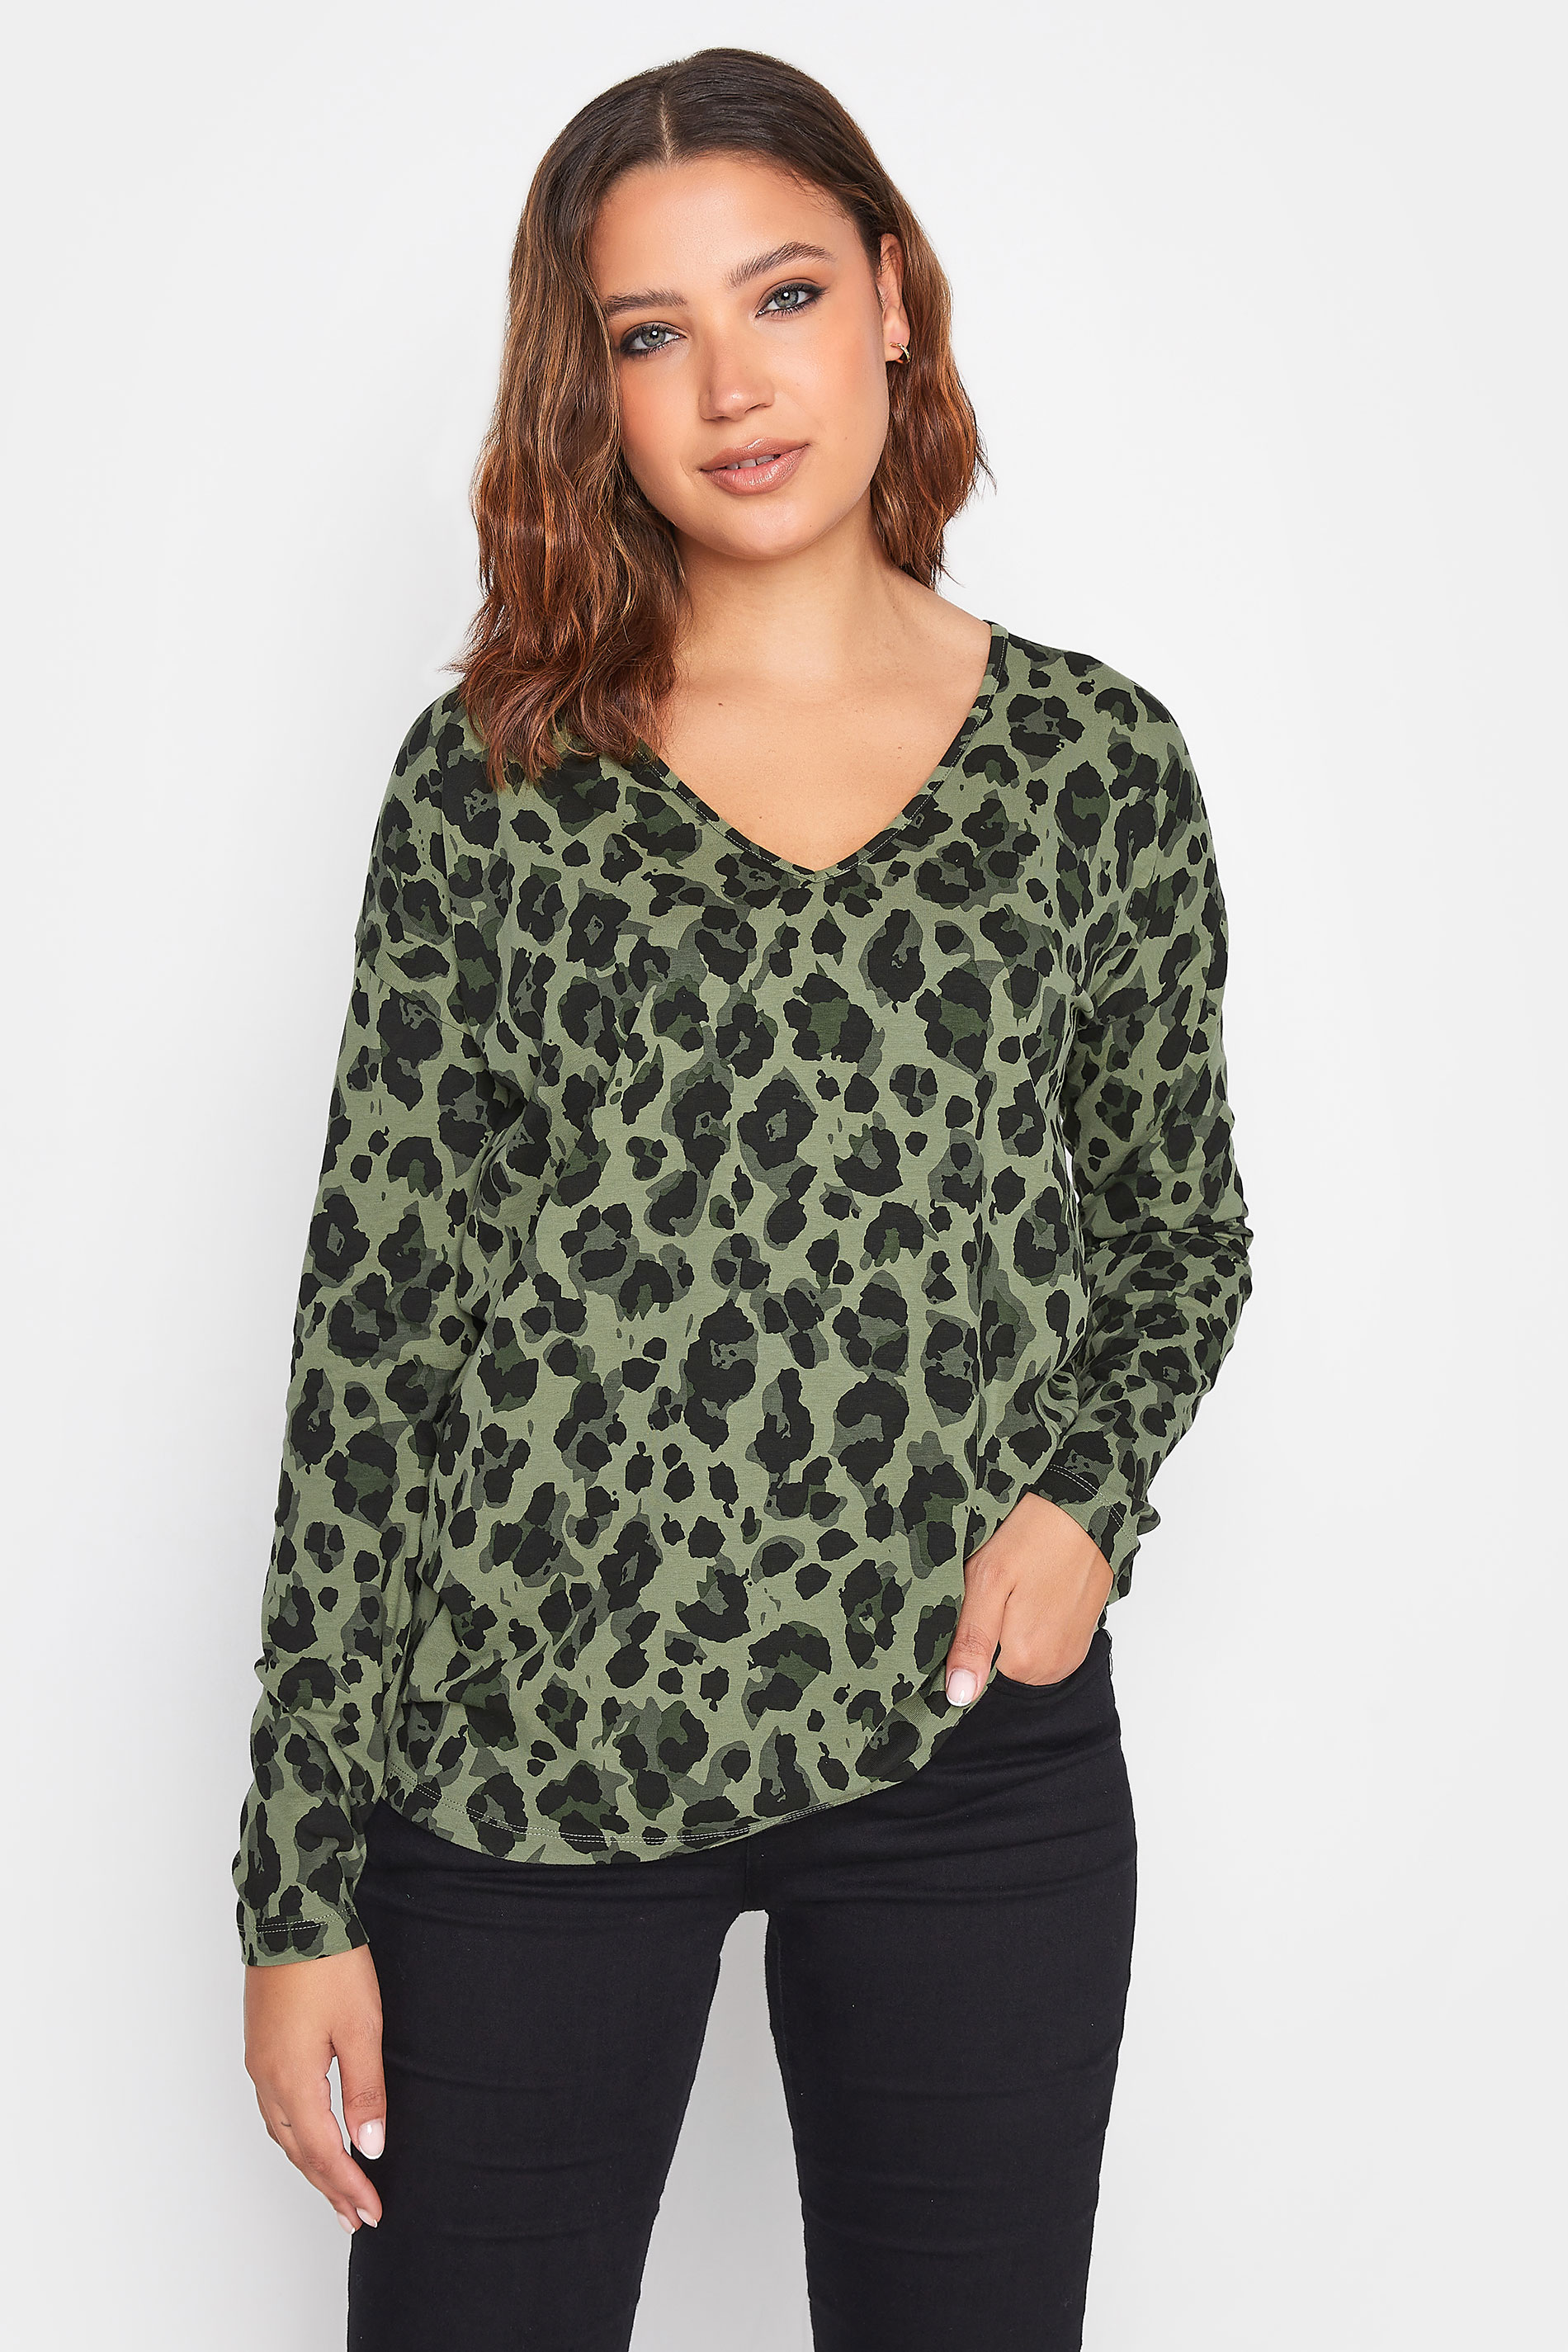 LTS Tall Women's Khaki Green Leopard Print Top | Long Tall Sally 1